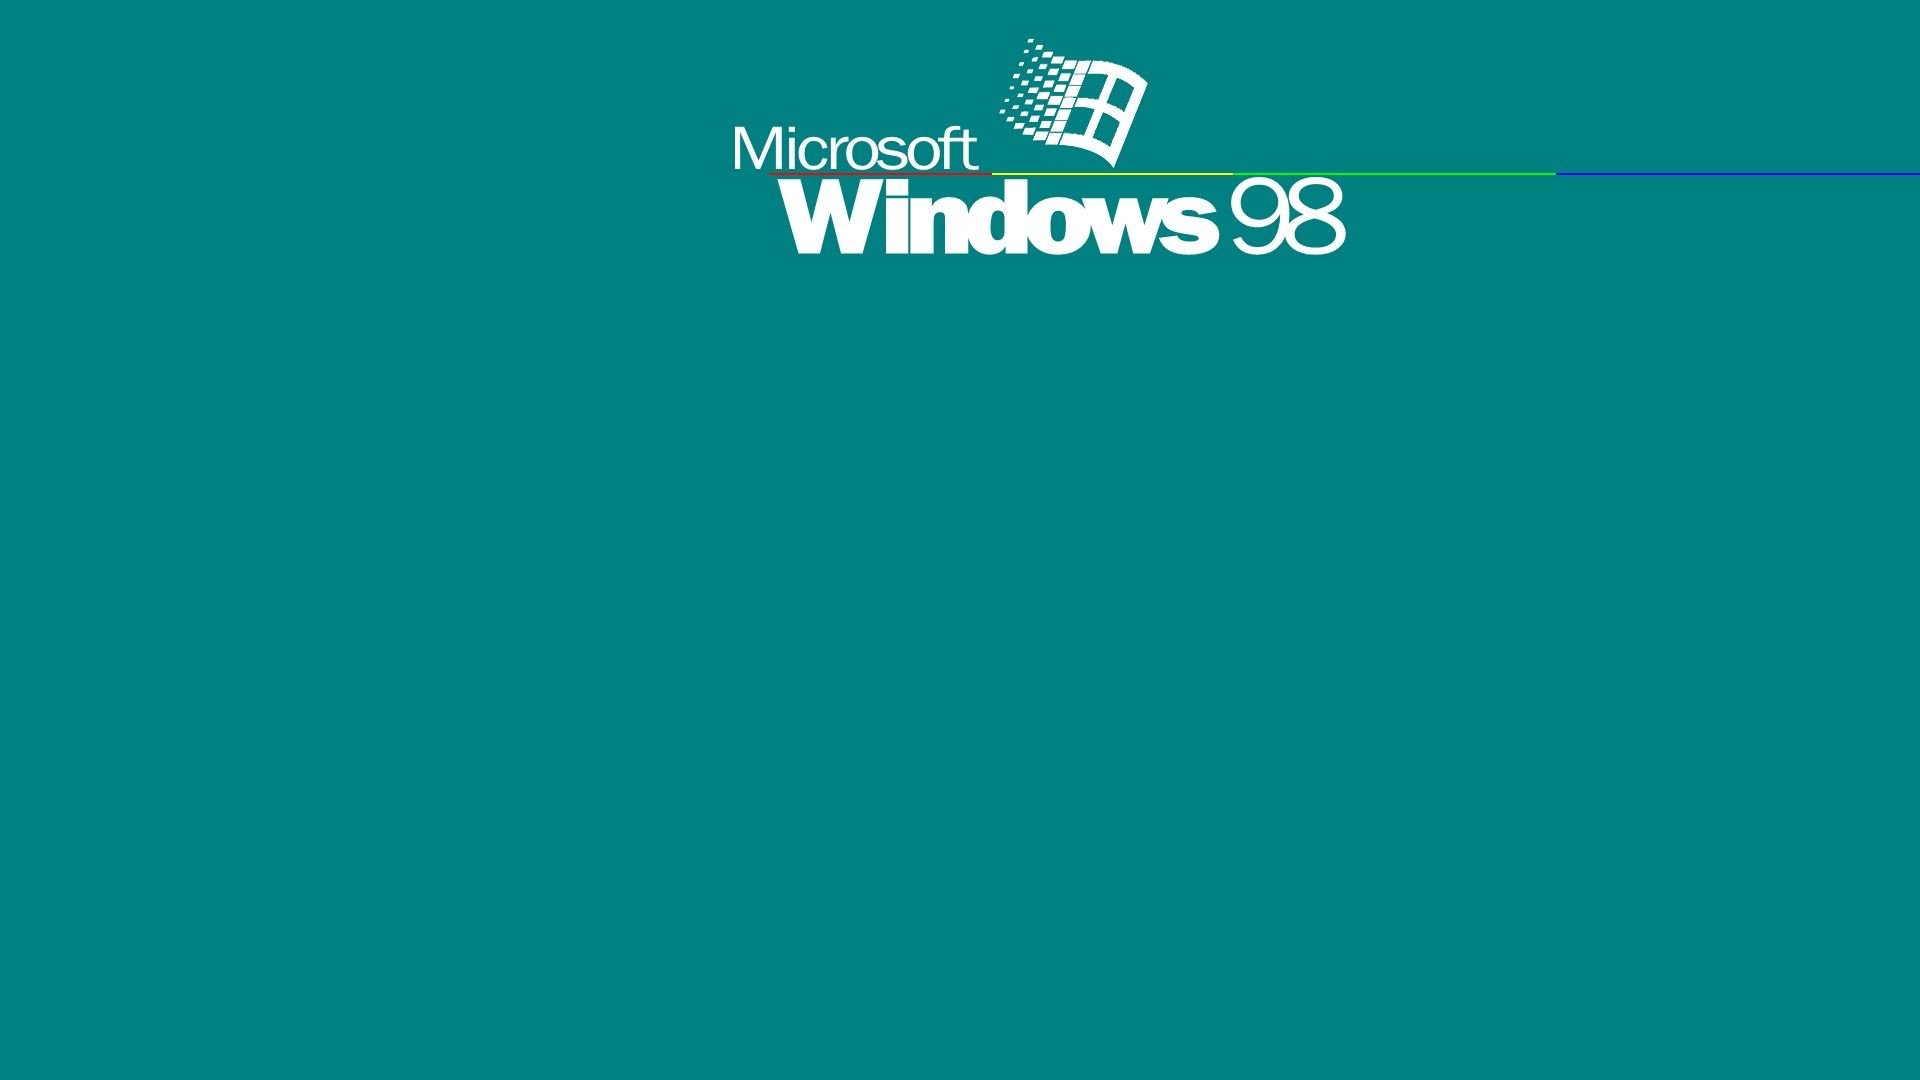 Windows 95 Desktop Wallpaper Windows 10 Wallpaper Retro Hd Wallpaper Backgrounds Download